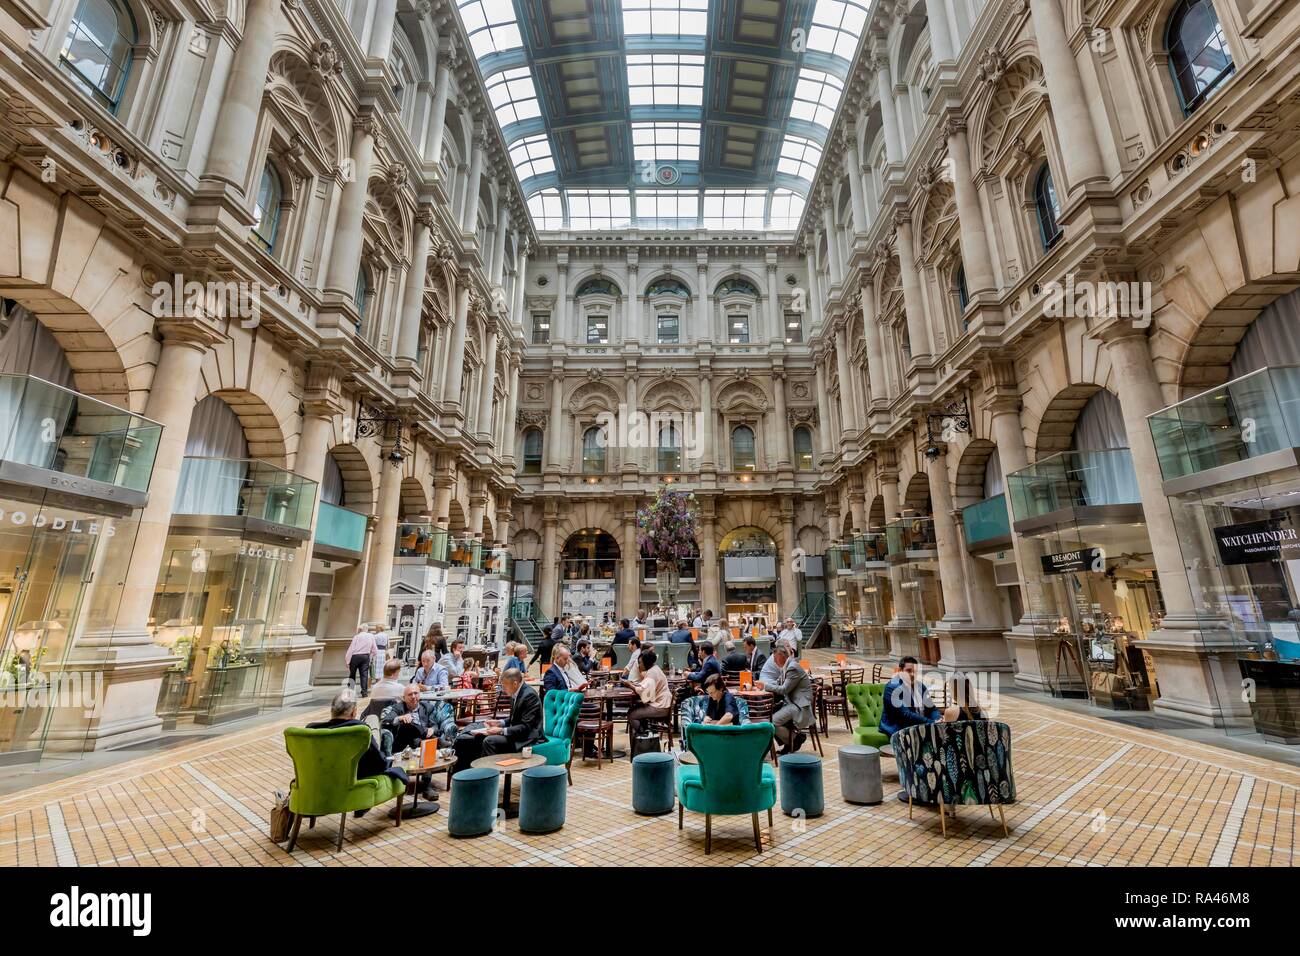 Royal Exchange, interior view, Threadneedle Street, financial district, London, Great Britain Stock Photo